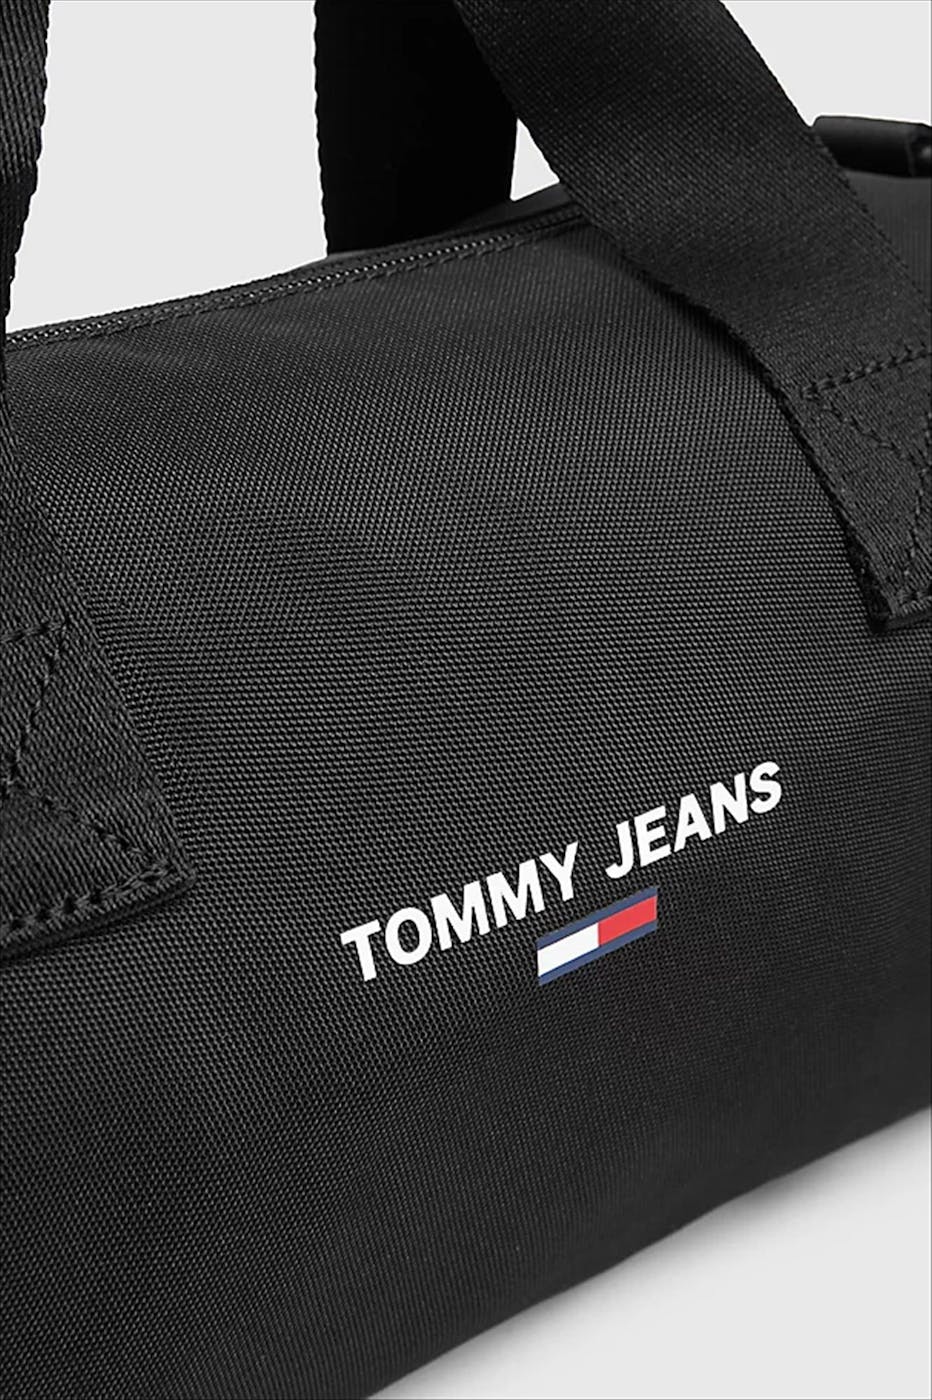 diepgaand Dood in de wereld Blind Tommy Jeans - Zwarte Essential Crossover tas